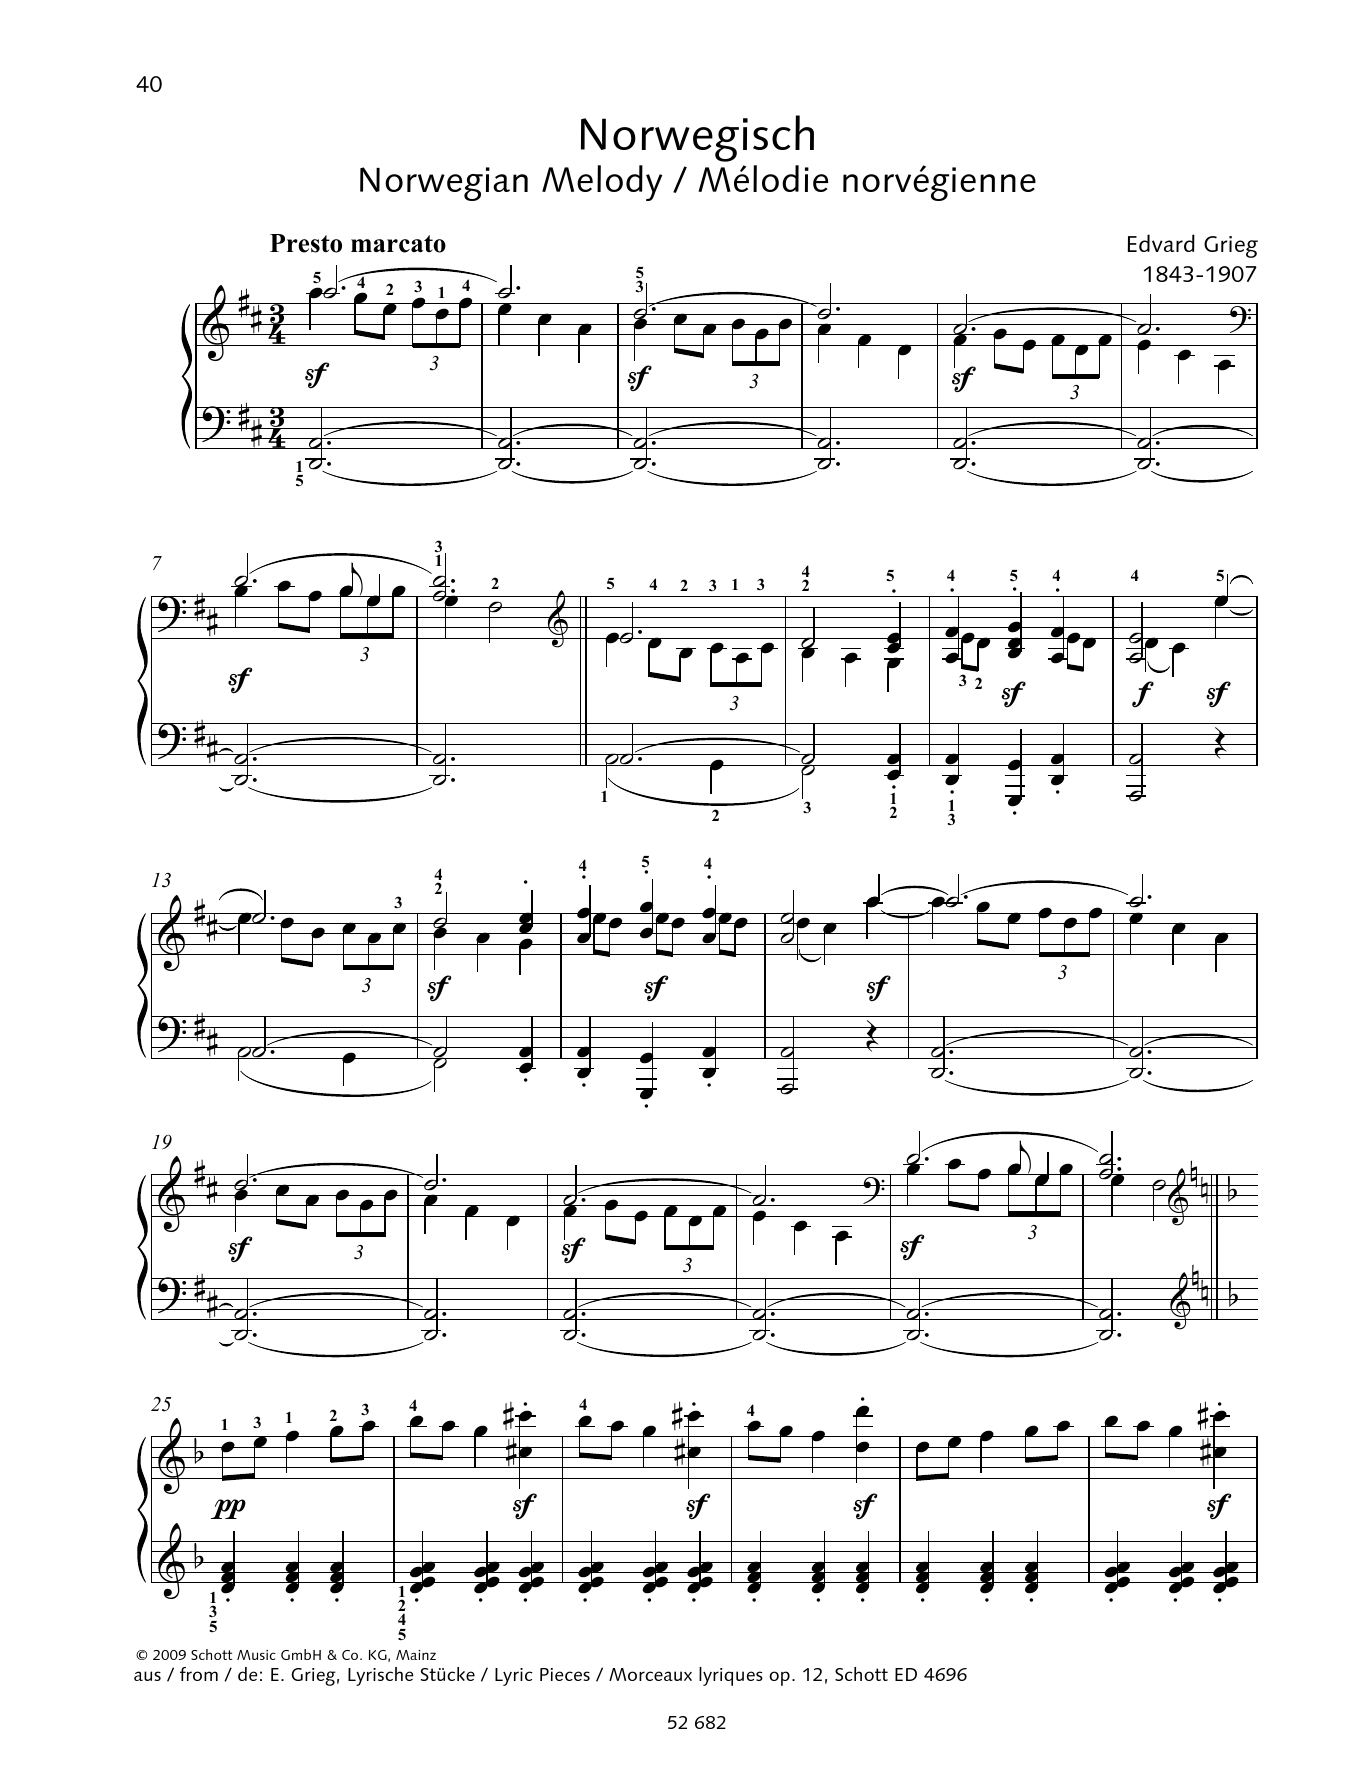 Download Edvard Grieg Norwegian Melody Sheet Music